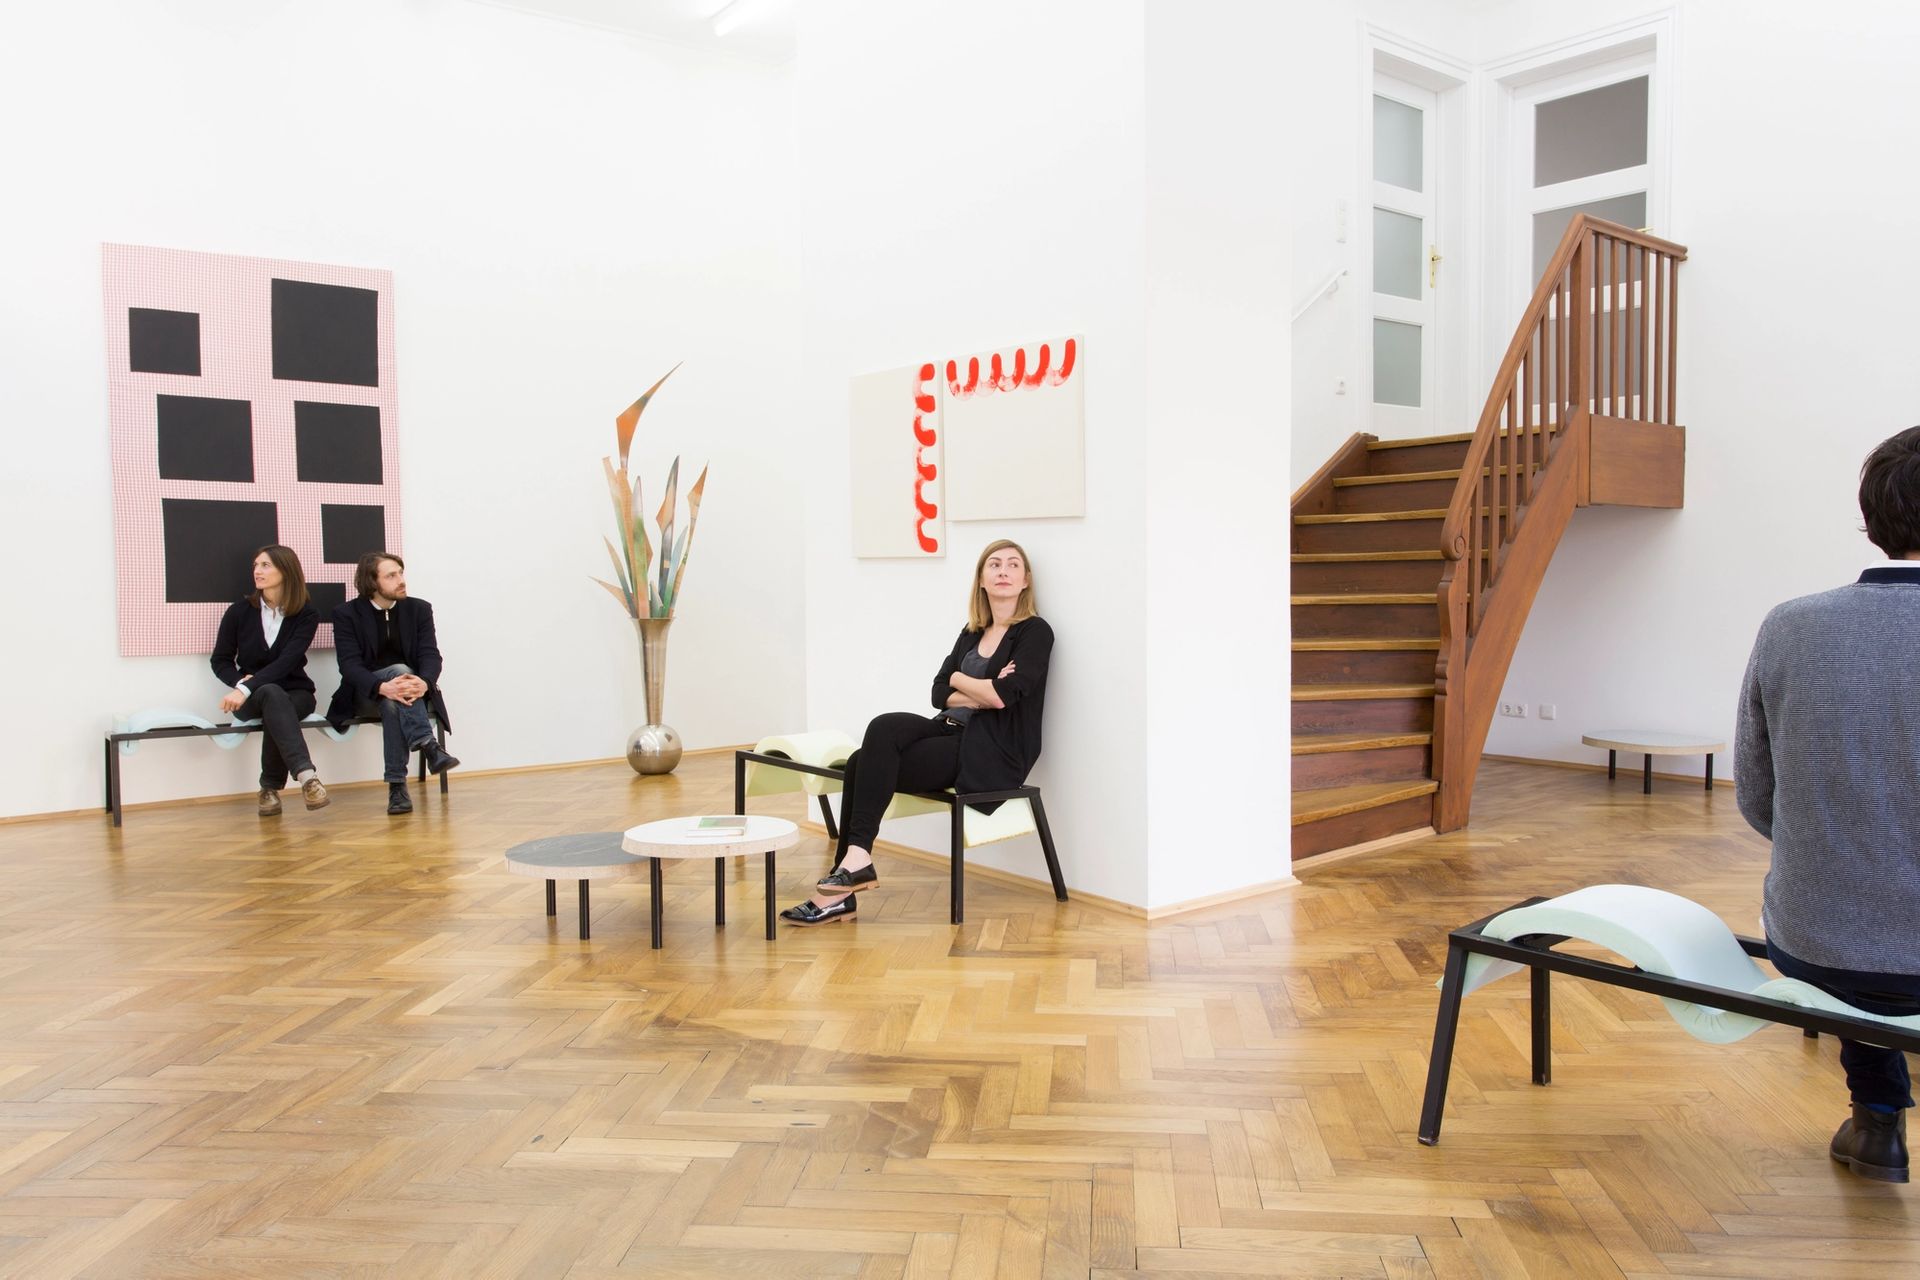 Installation view: Elvire Bonduelle, “waiting room #4”, 2015